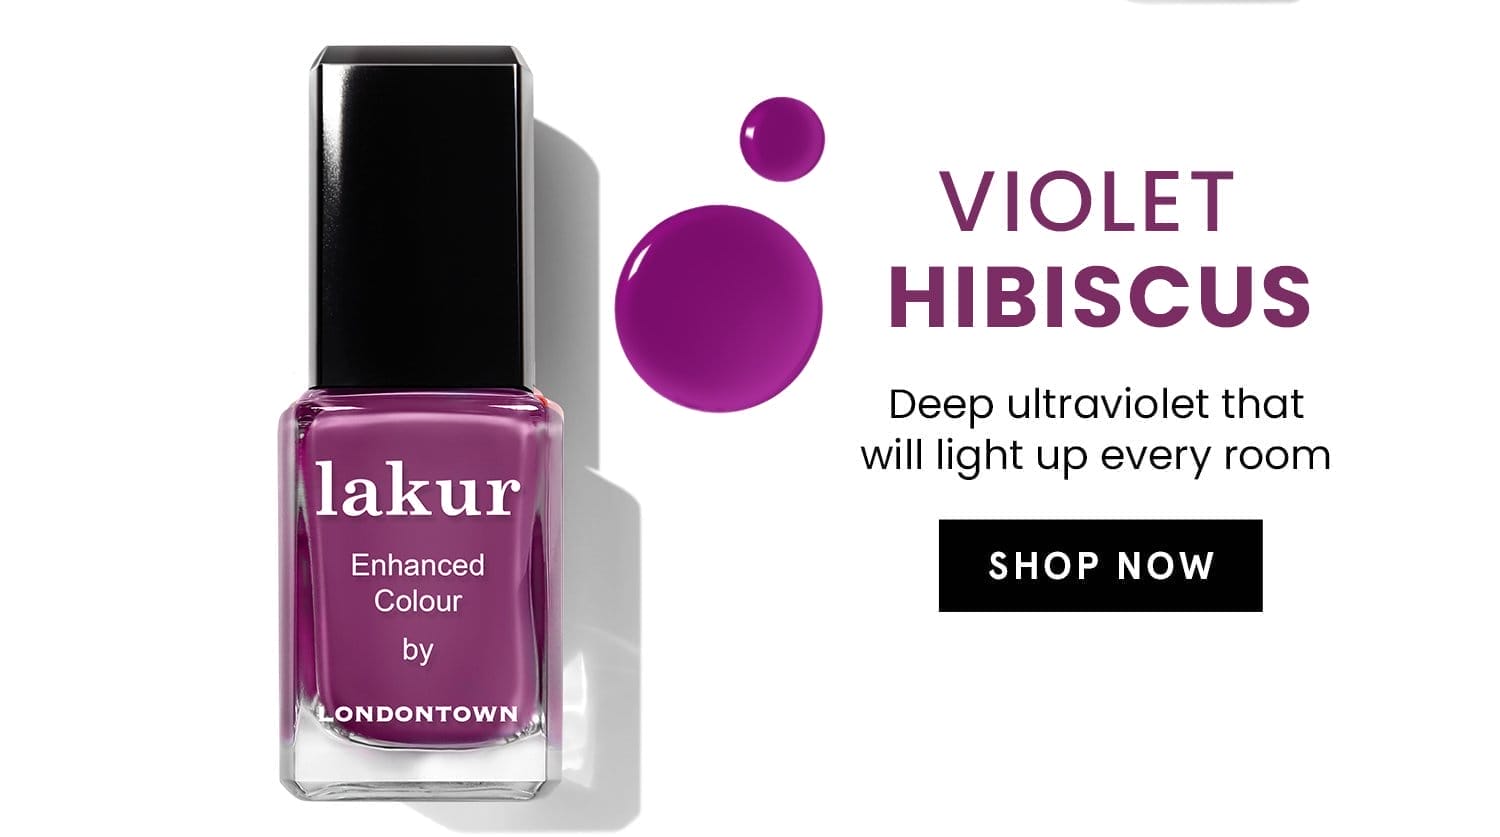 Violet Hibiscus | Shop Now